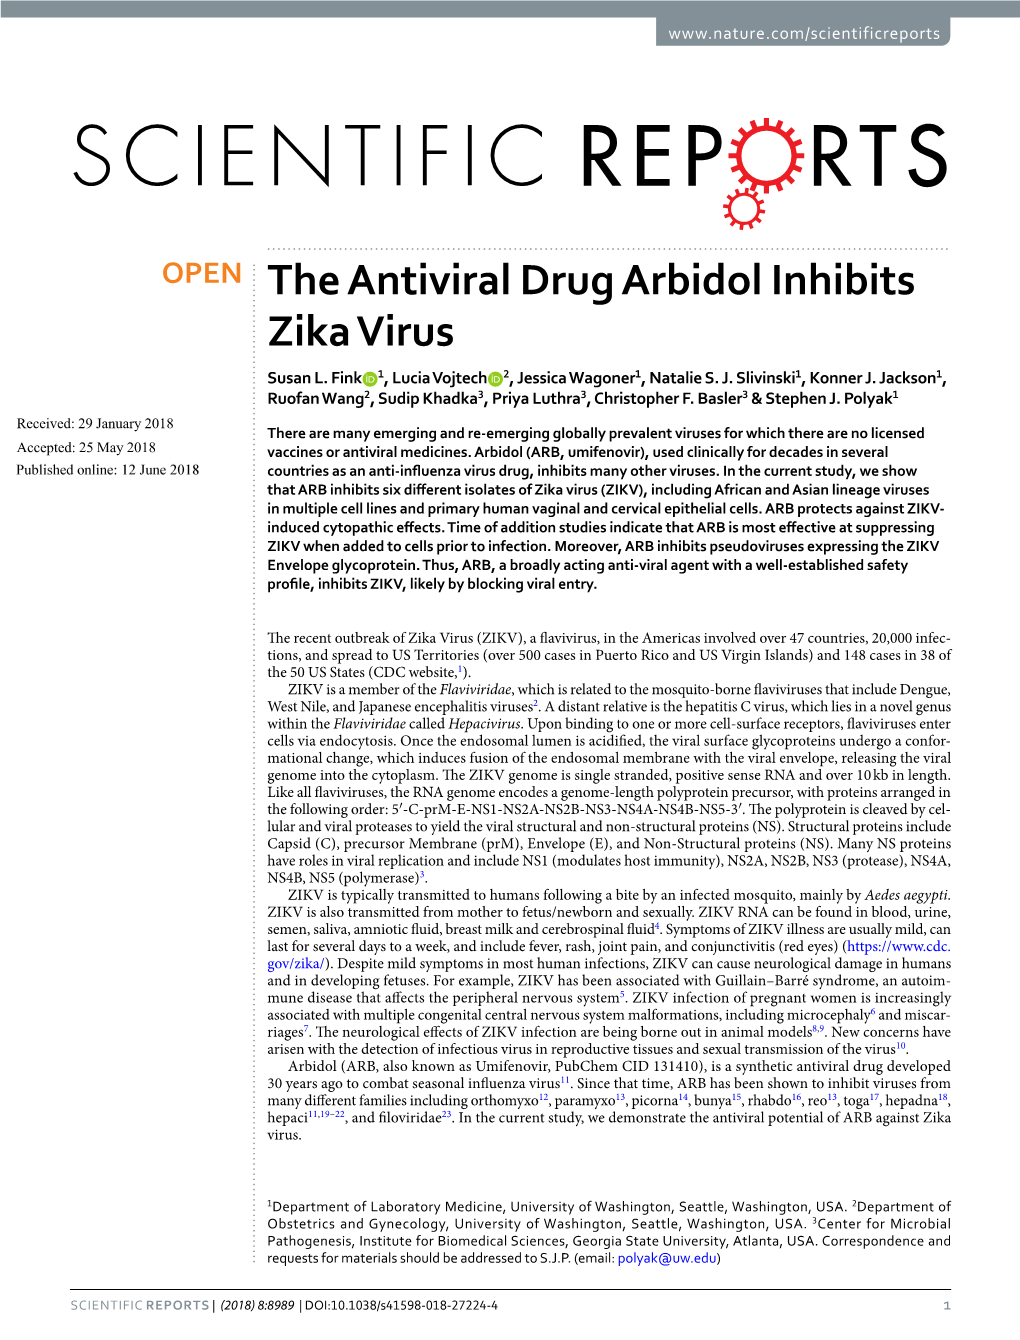 The Antiviral Drug Arbidol Inhibits Zika Virus Susan L